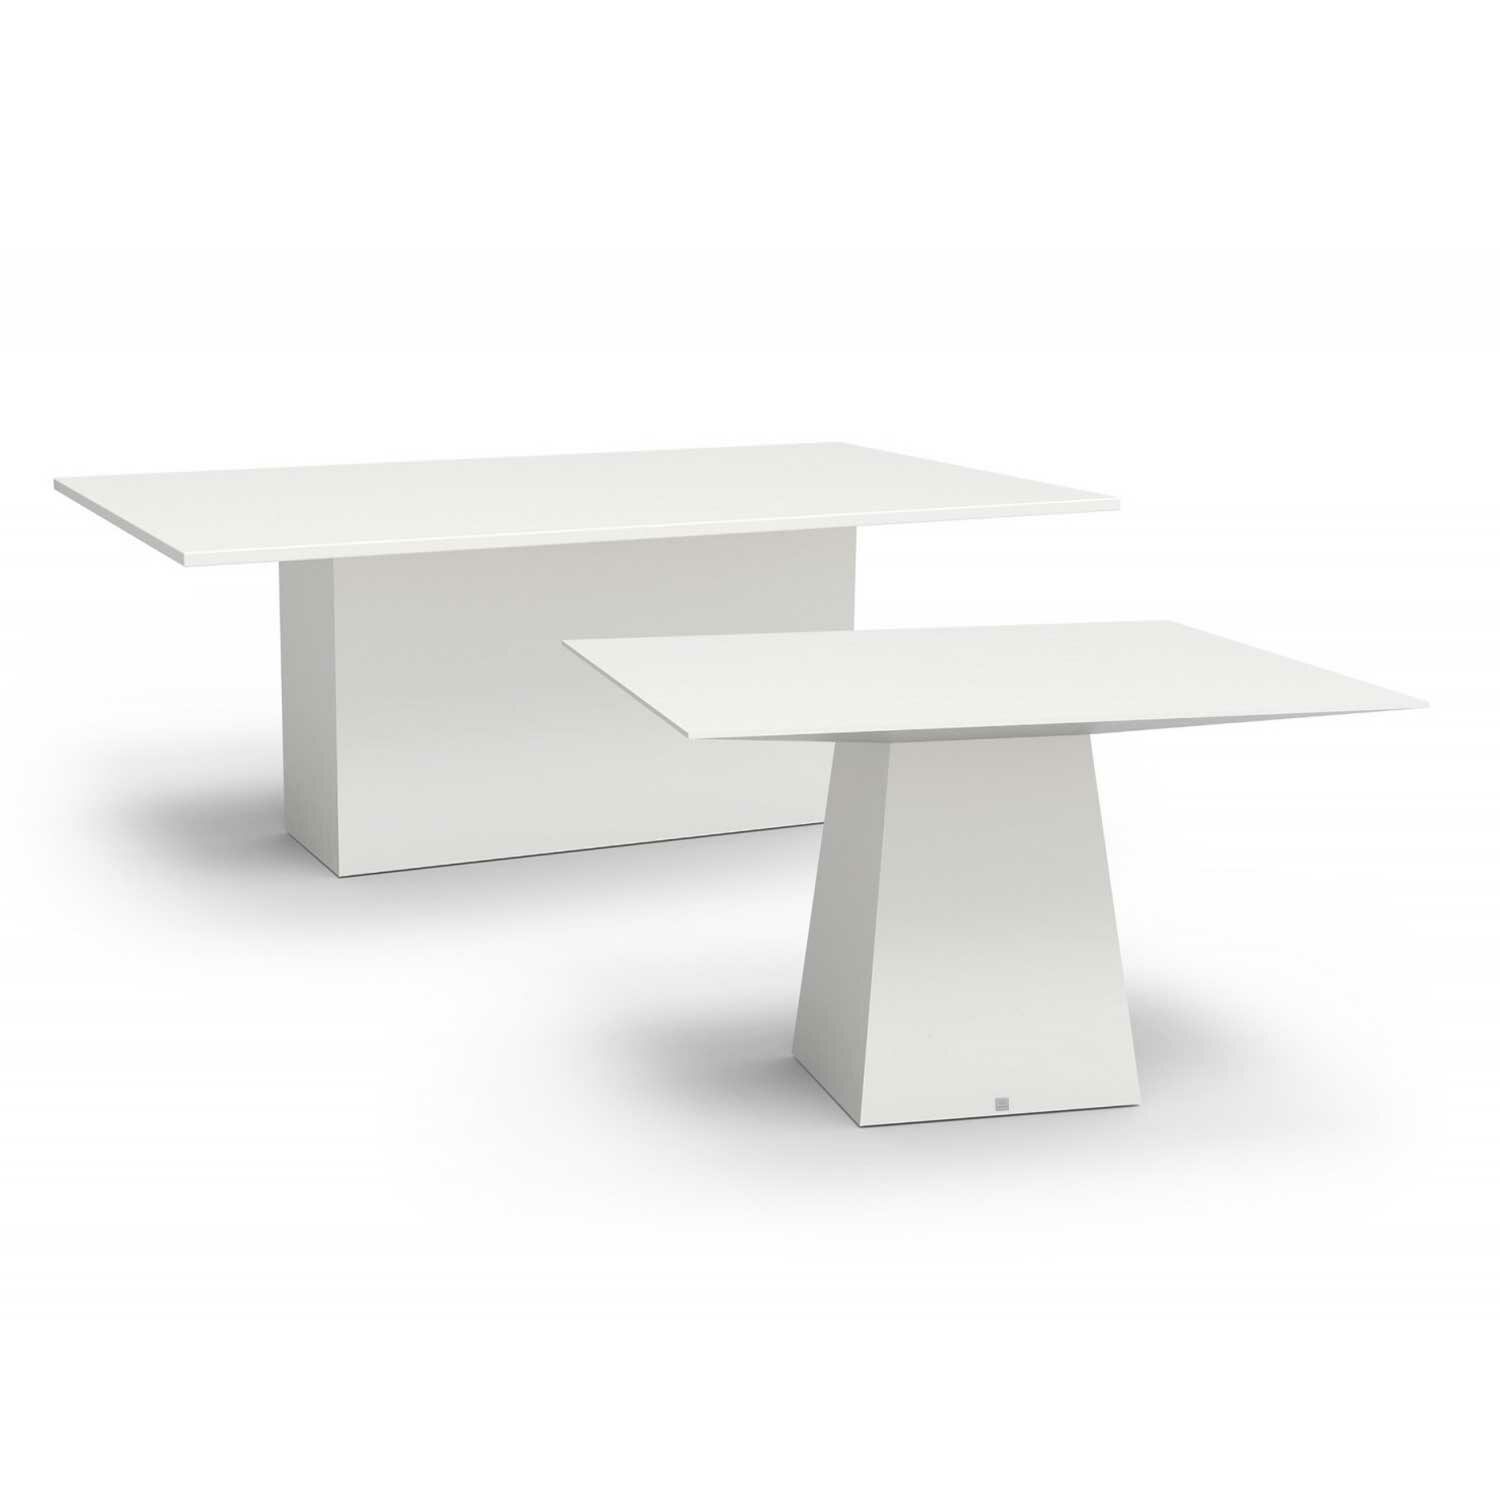 QUADRA dining table matt white